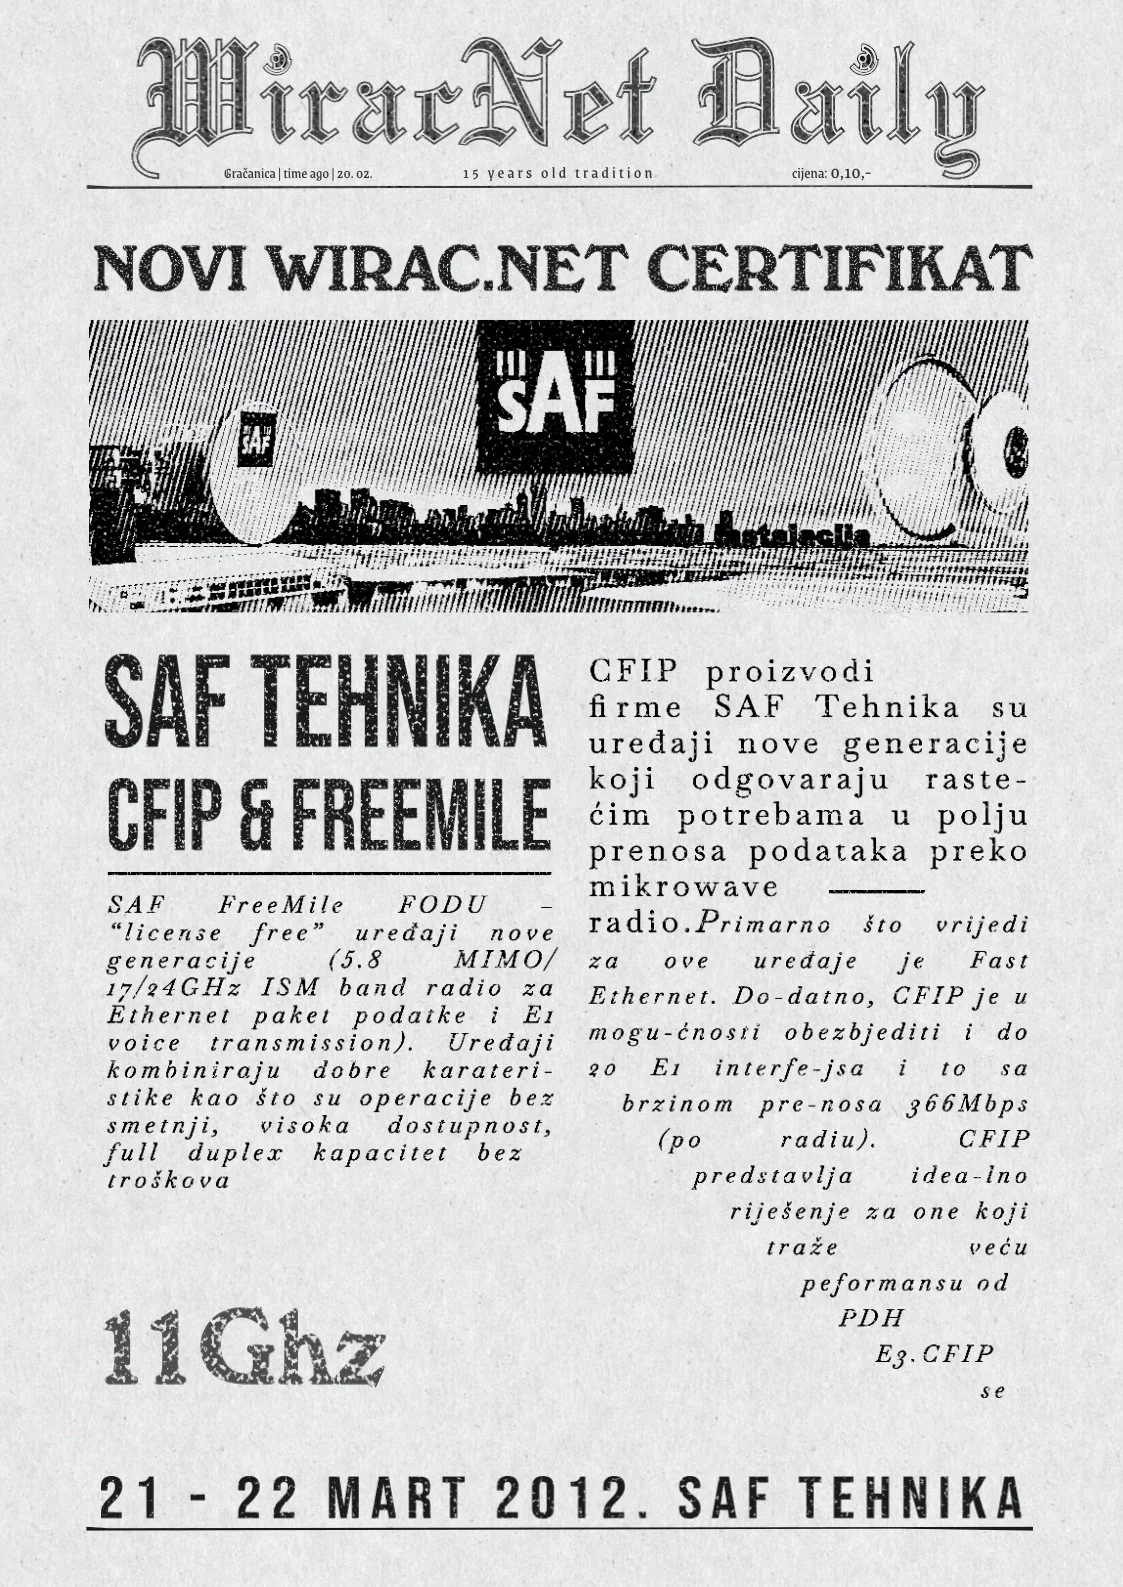 SAF Tehnika Certifikat, 2012.